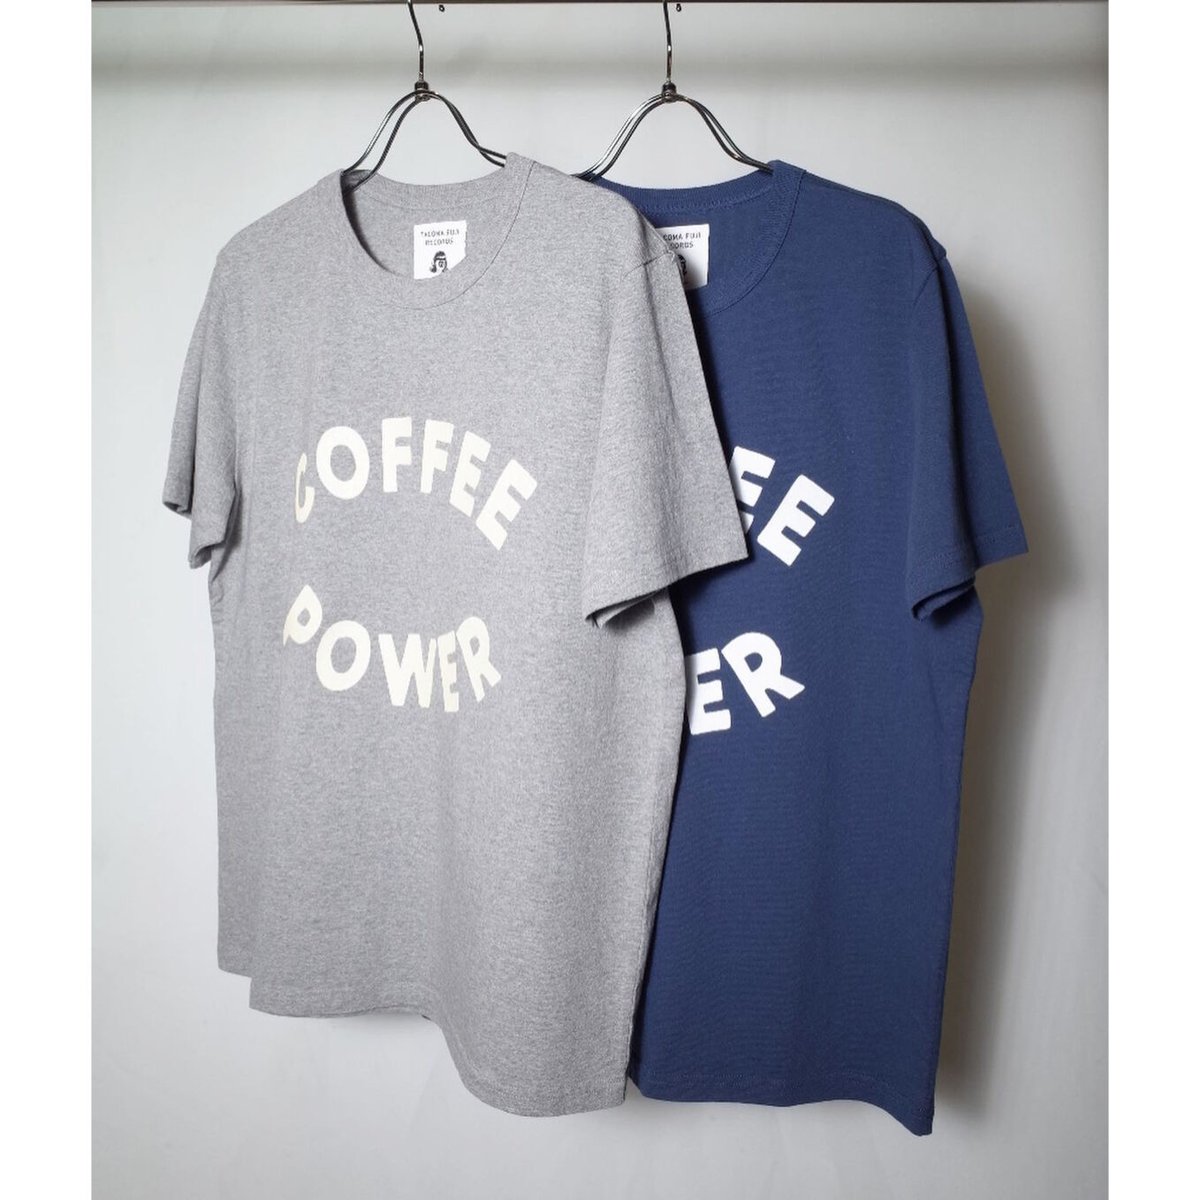 COFFEE POWER tacoma fuji records Tシャツ - メンズファッション